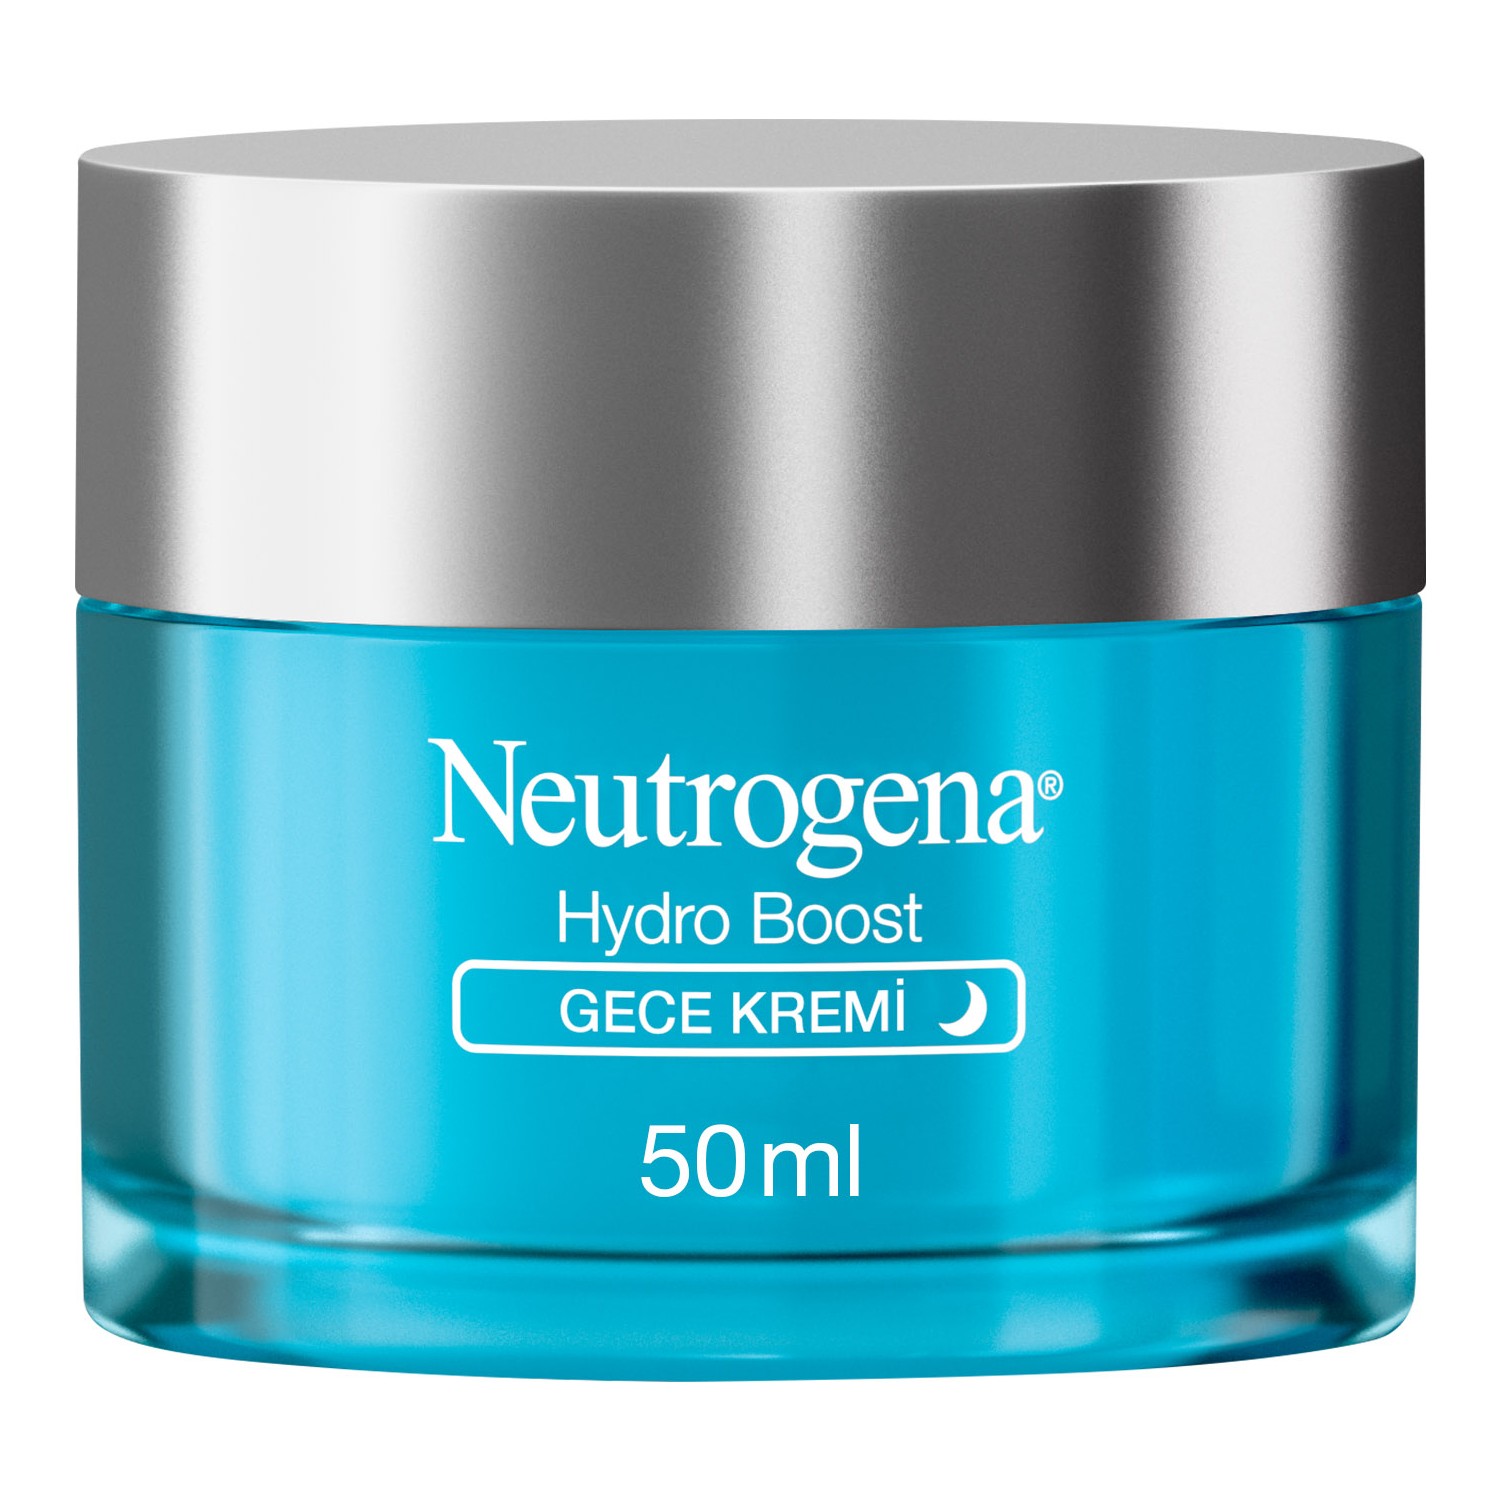 Ночной крем Neutrogena Hydro Boost, 50 мл гель крем neutrogena hydro boost для сухой кожи 50 мл